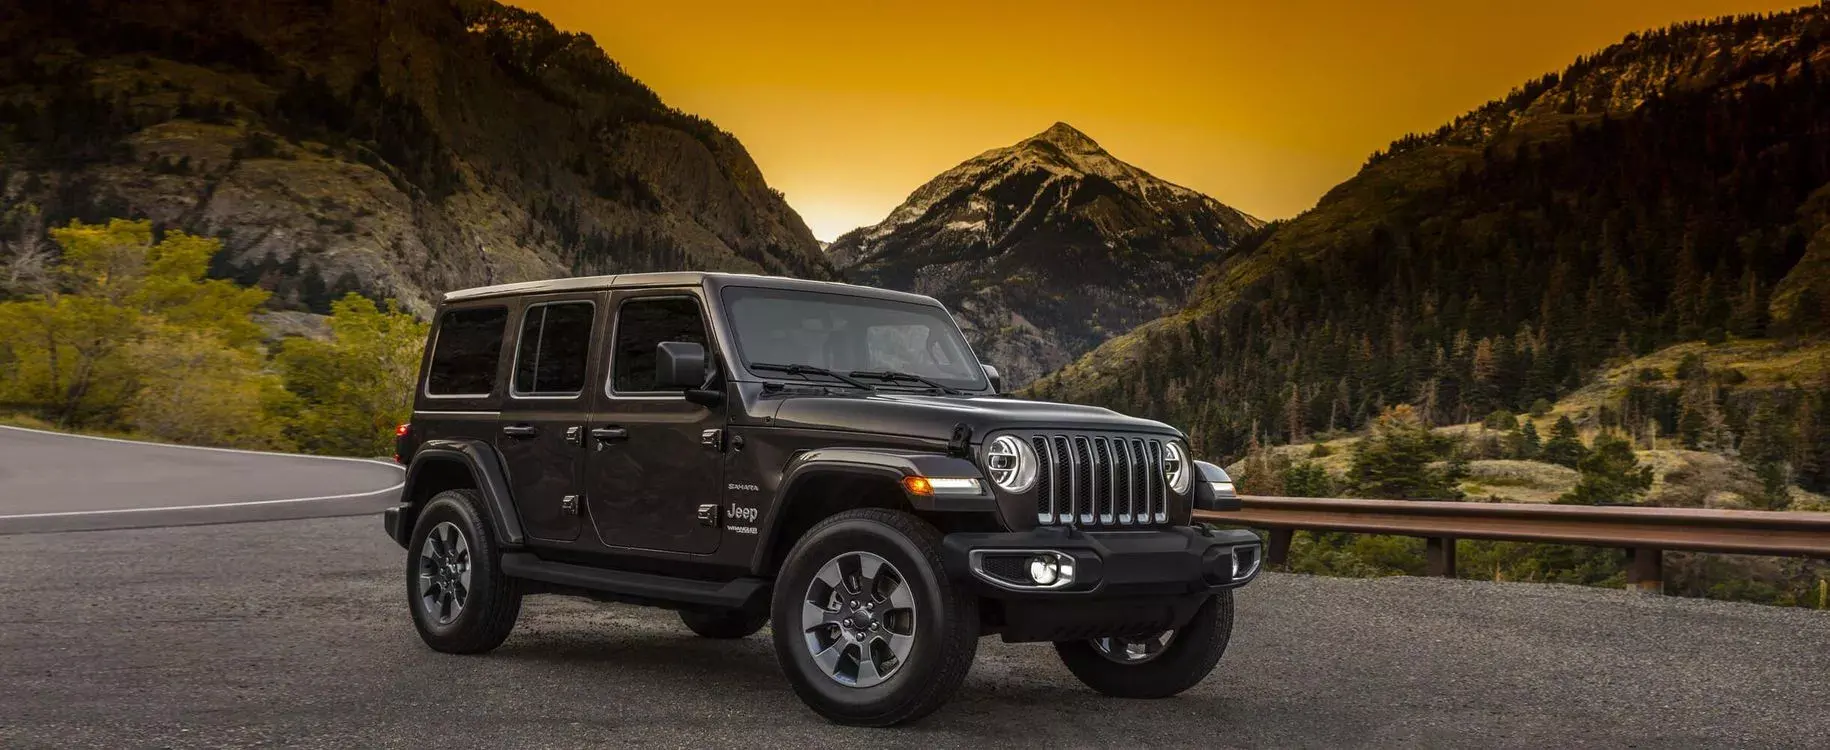 Jeep Rental Denver: Jeep Wrangler 4x4 | Budget Car Rental